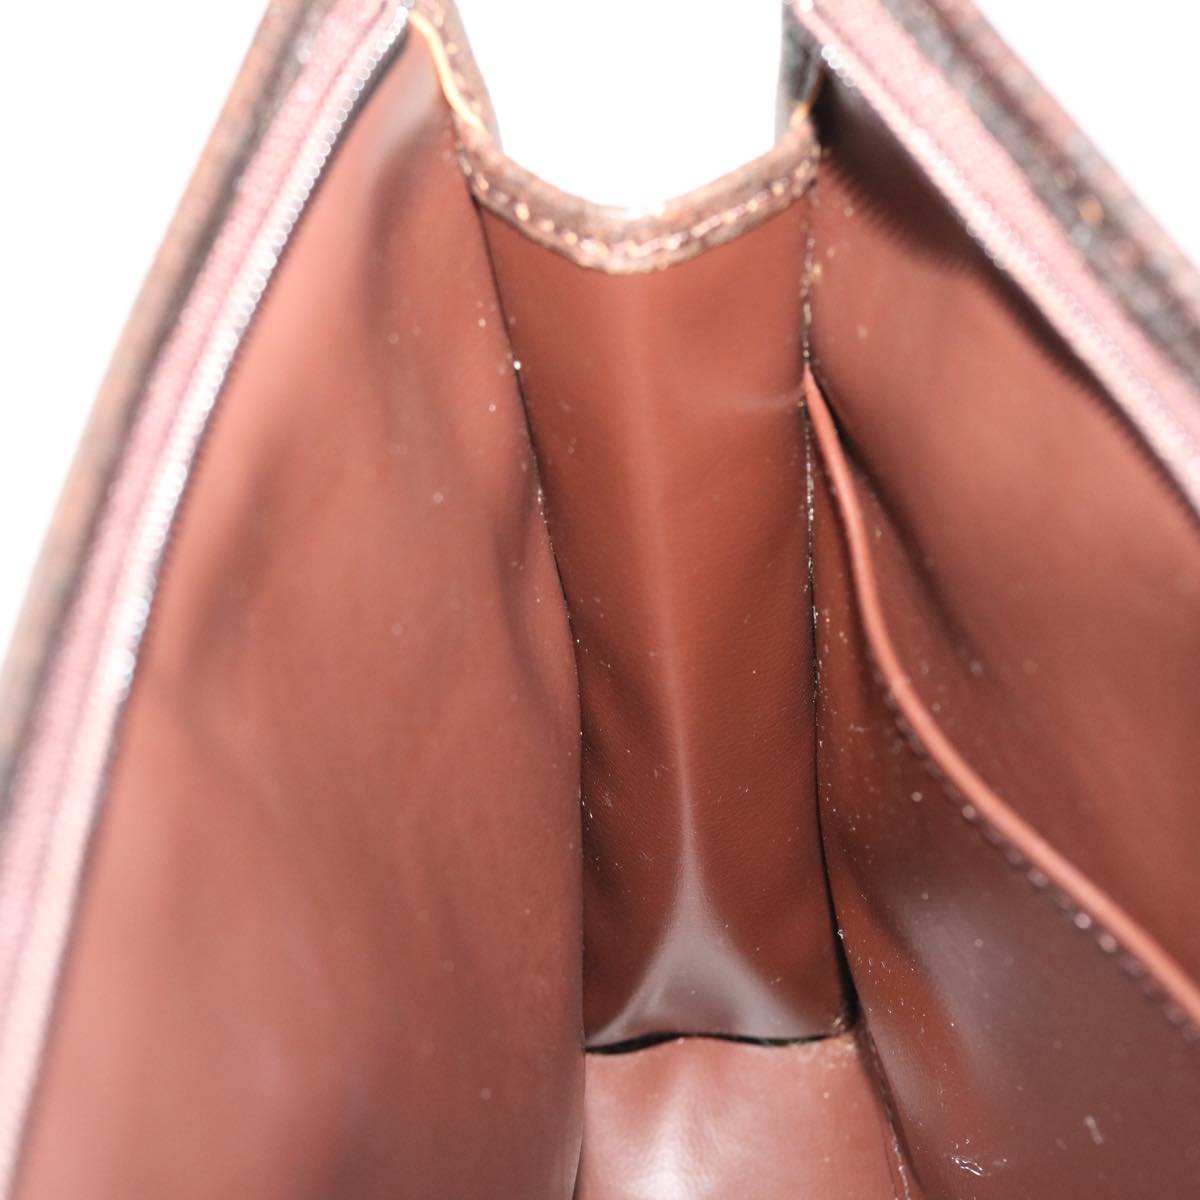 Burberrys Nova Check Clutch Bag Canvas Leather Beige Brown Auth 51662